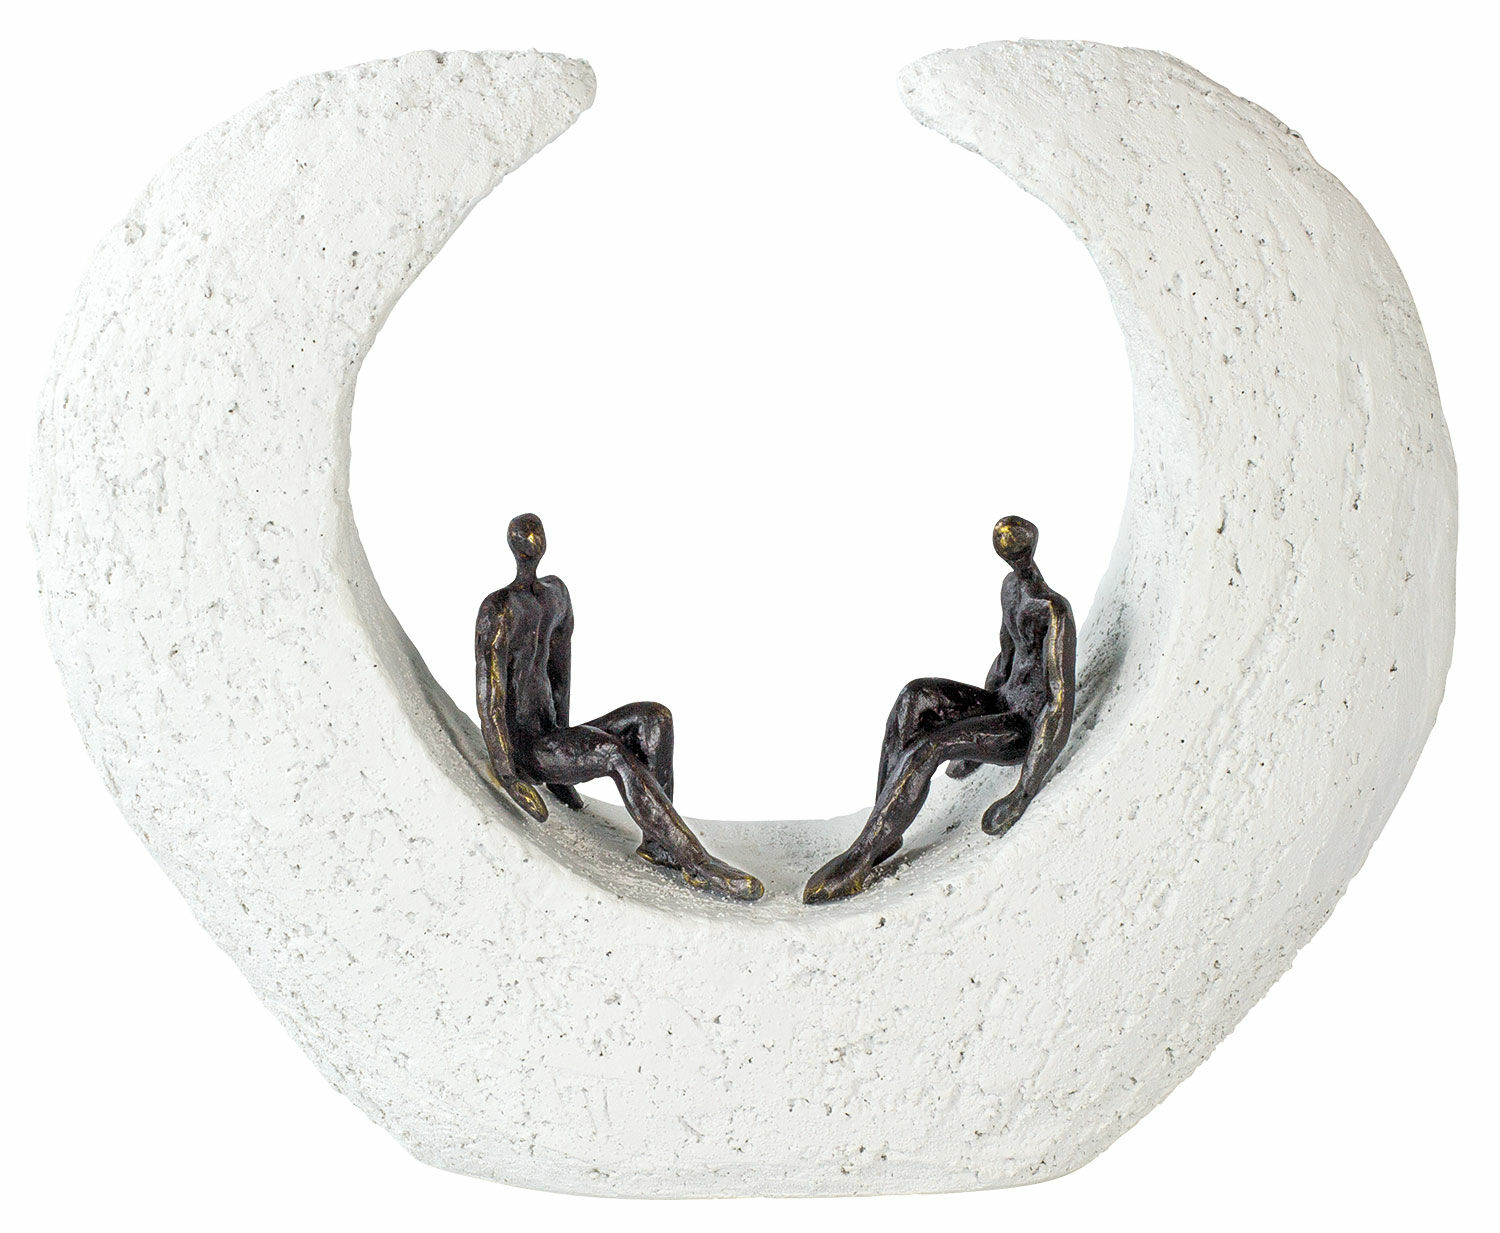 Sculpture "Togetherness" by Gerard